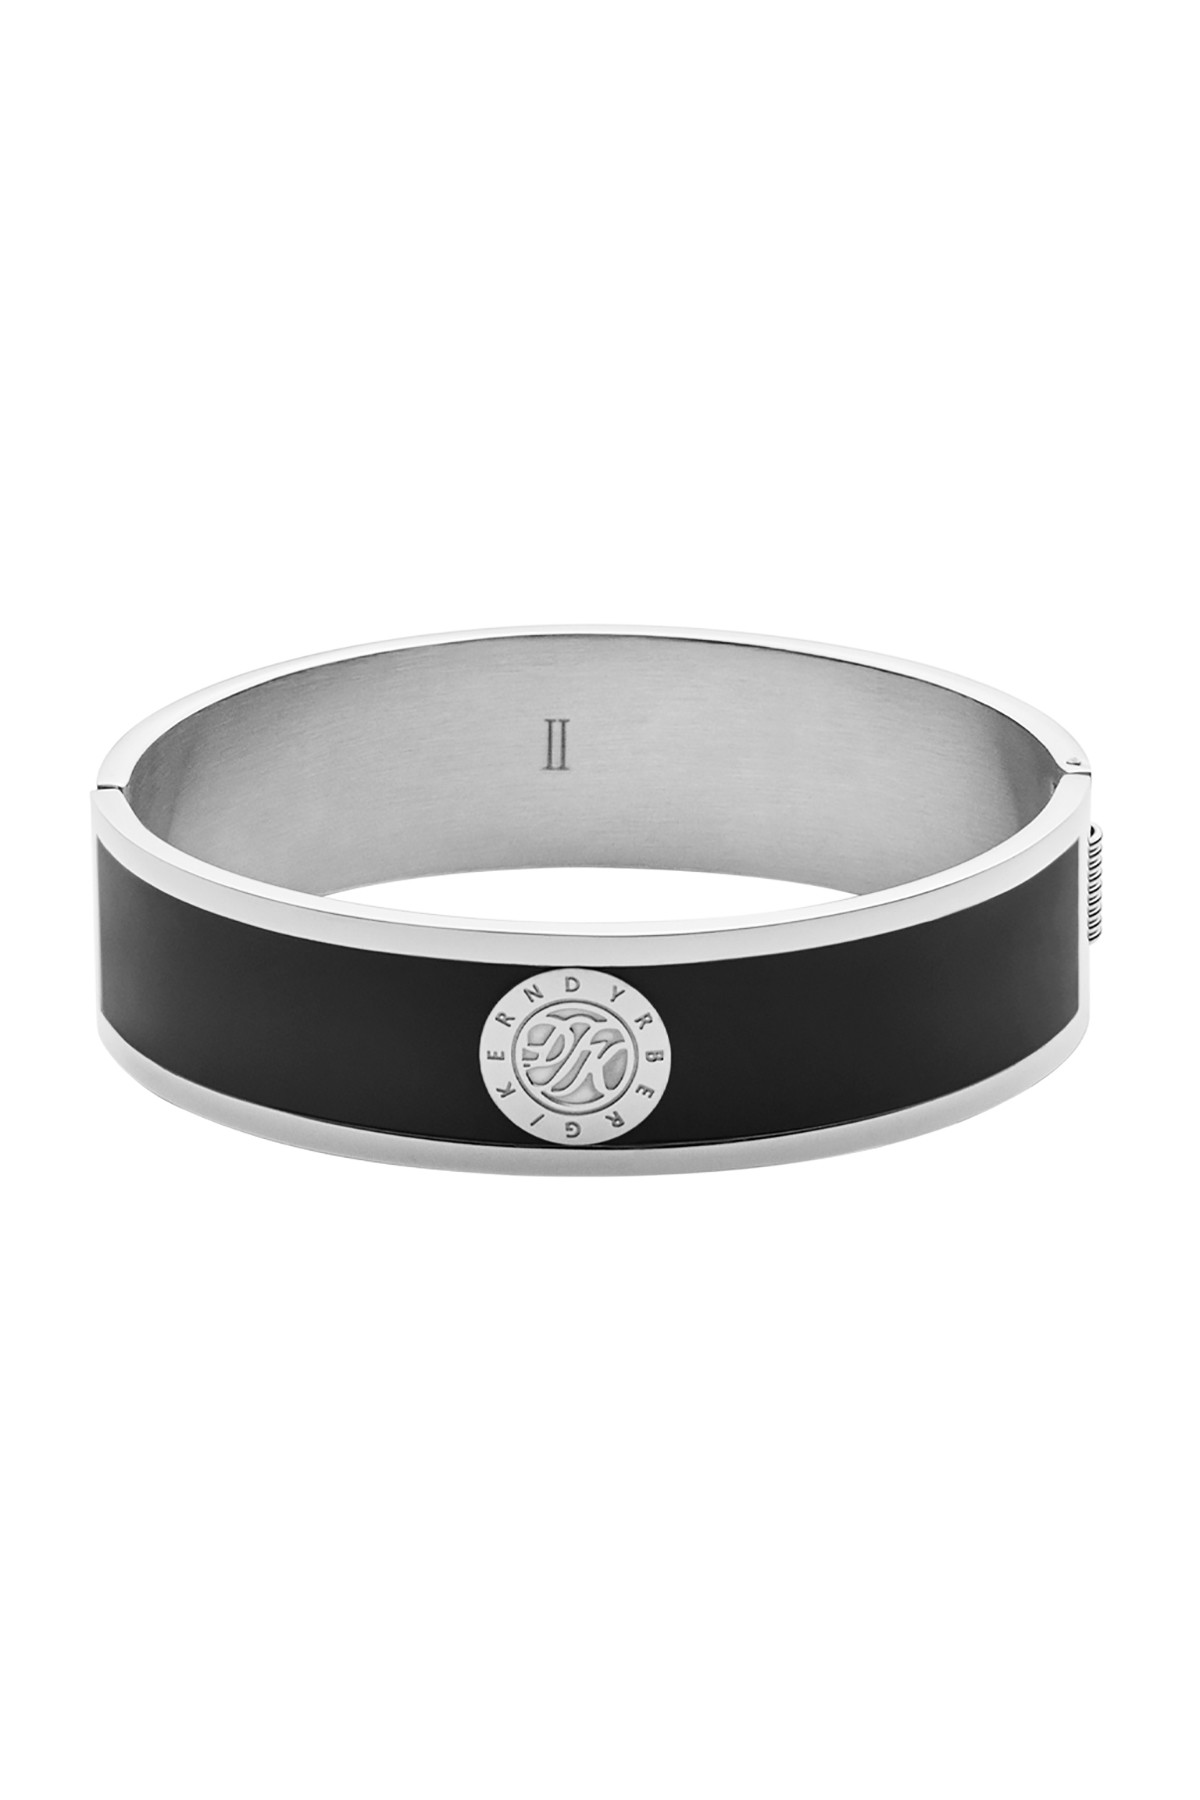 Dyrberg/Kern Jovika Bracelet, Color: Silver/Black, I, Women